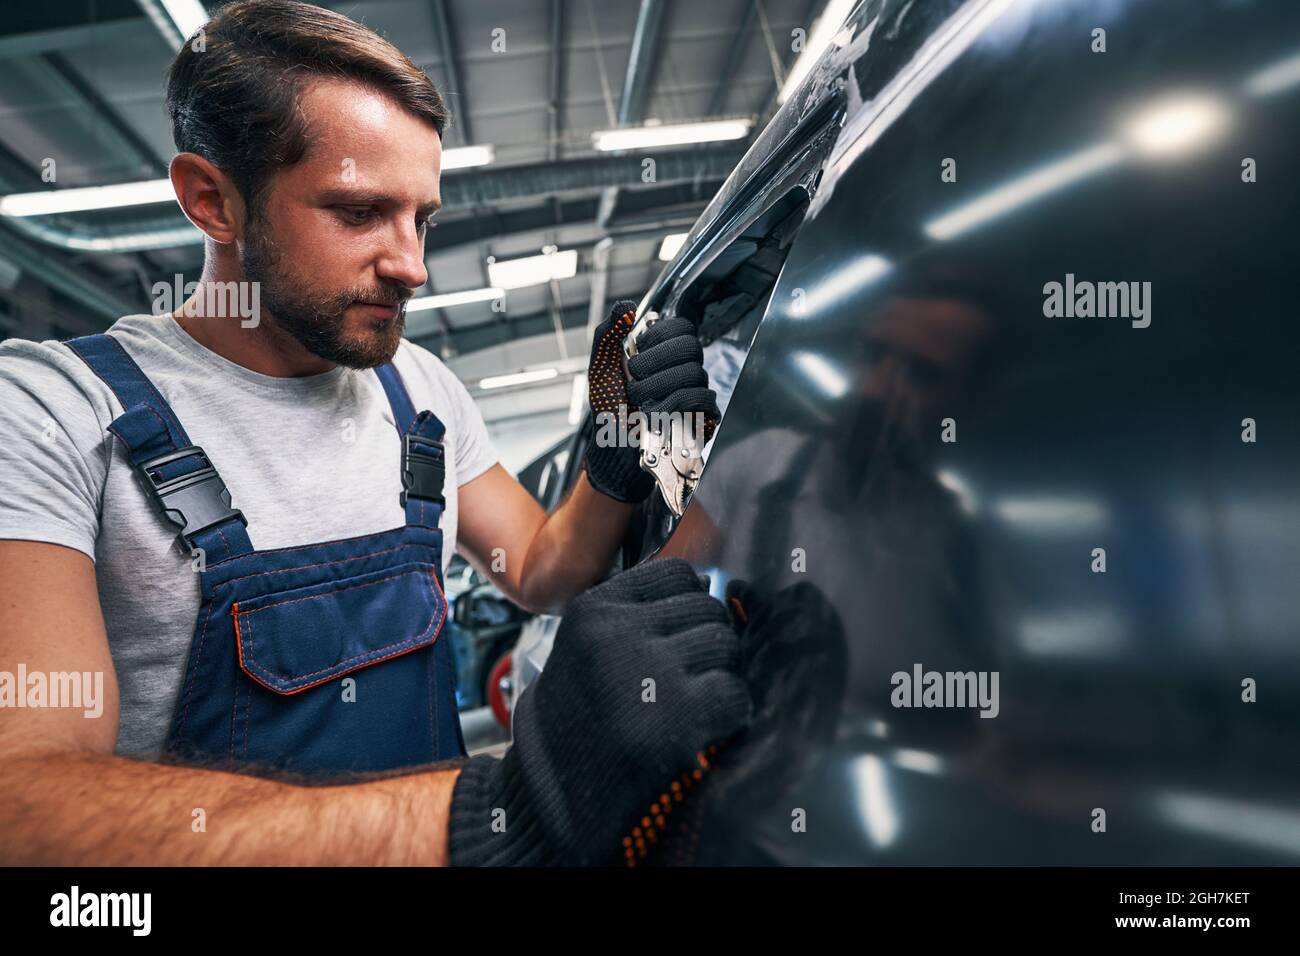 Auto mechanic using vice grip on car external detail Stock Photo